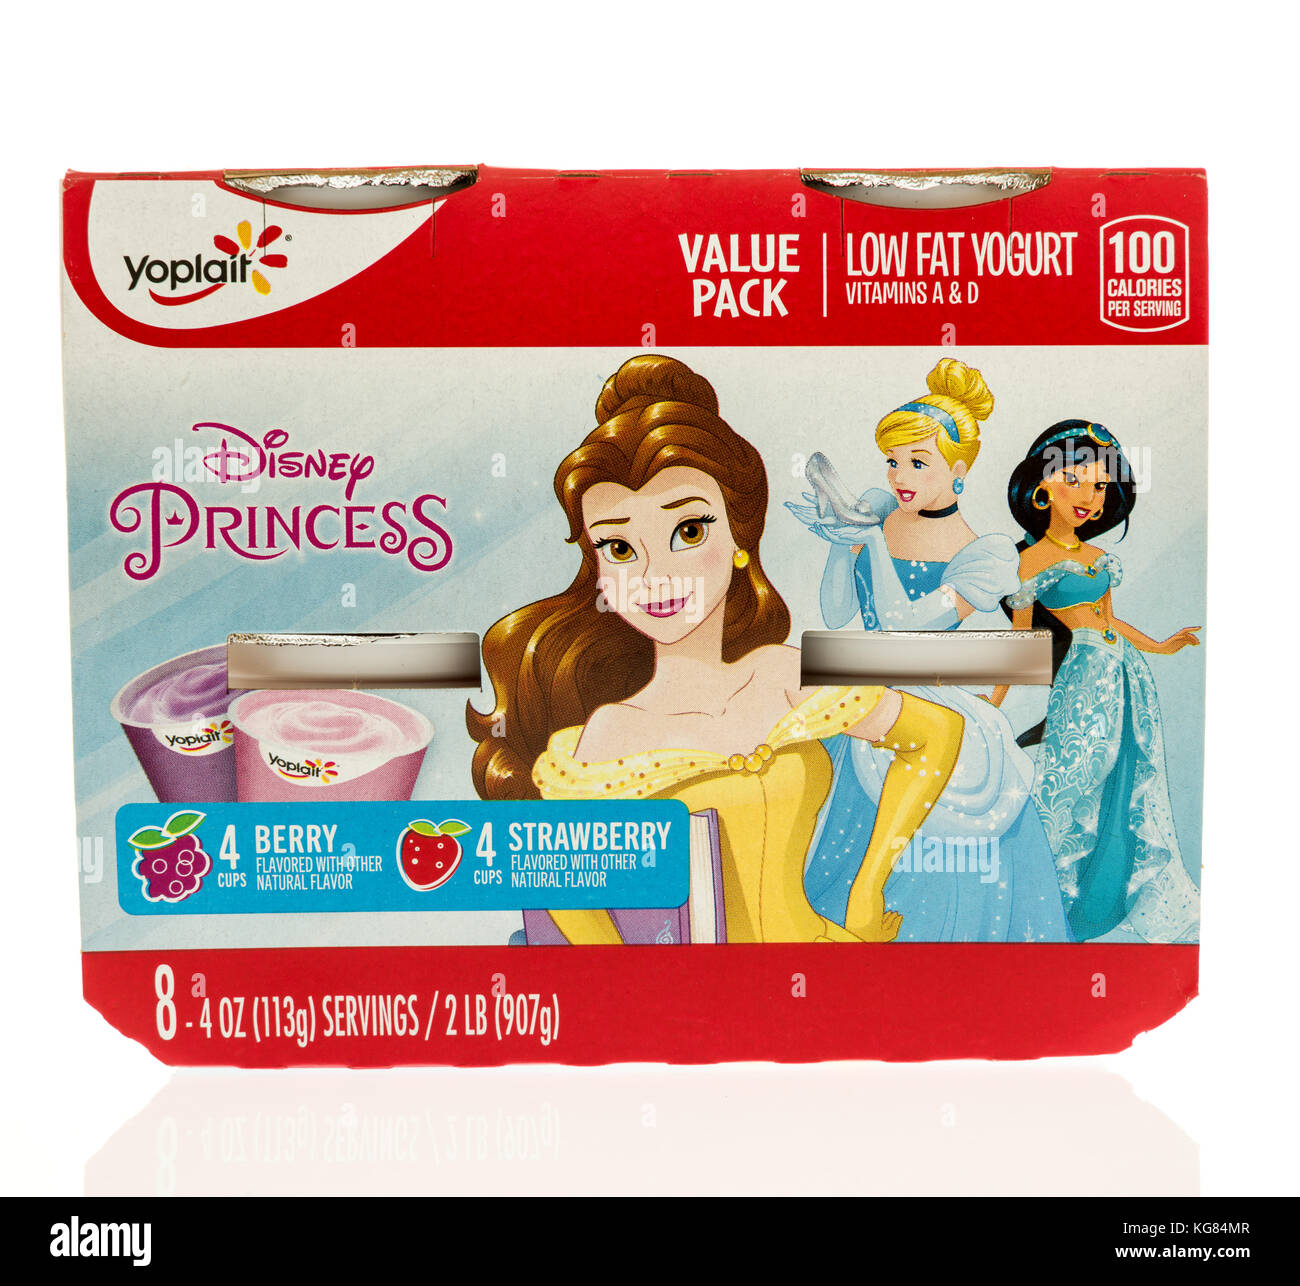 Winneconne, WI - 31 October 2017:  A pack of Yoplait Disney Princess yogurt on an isolated background. Stock Photo